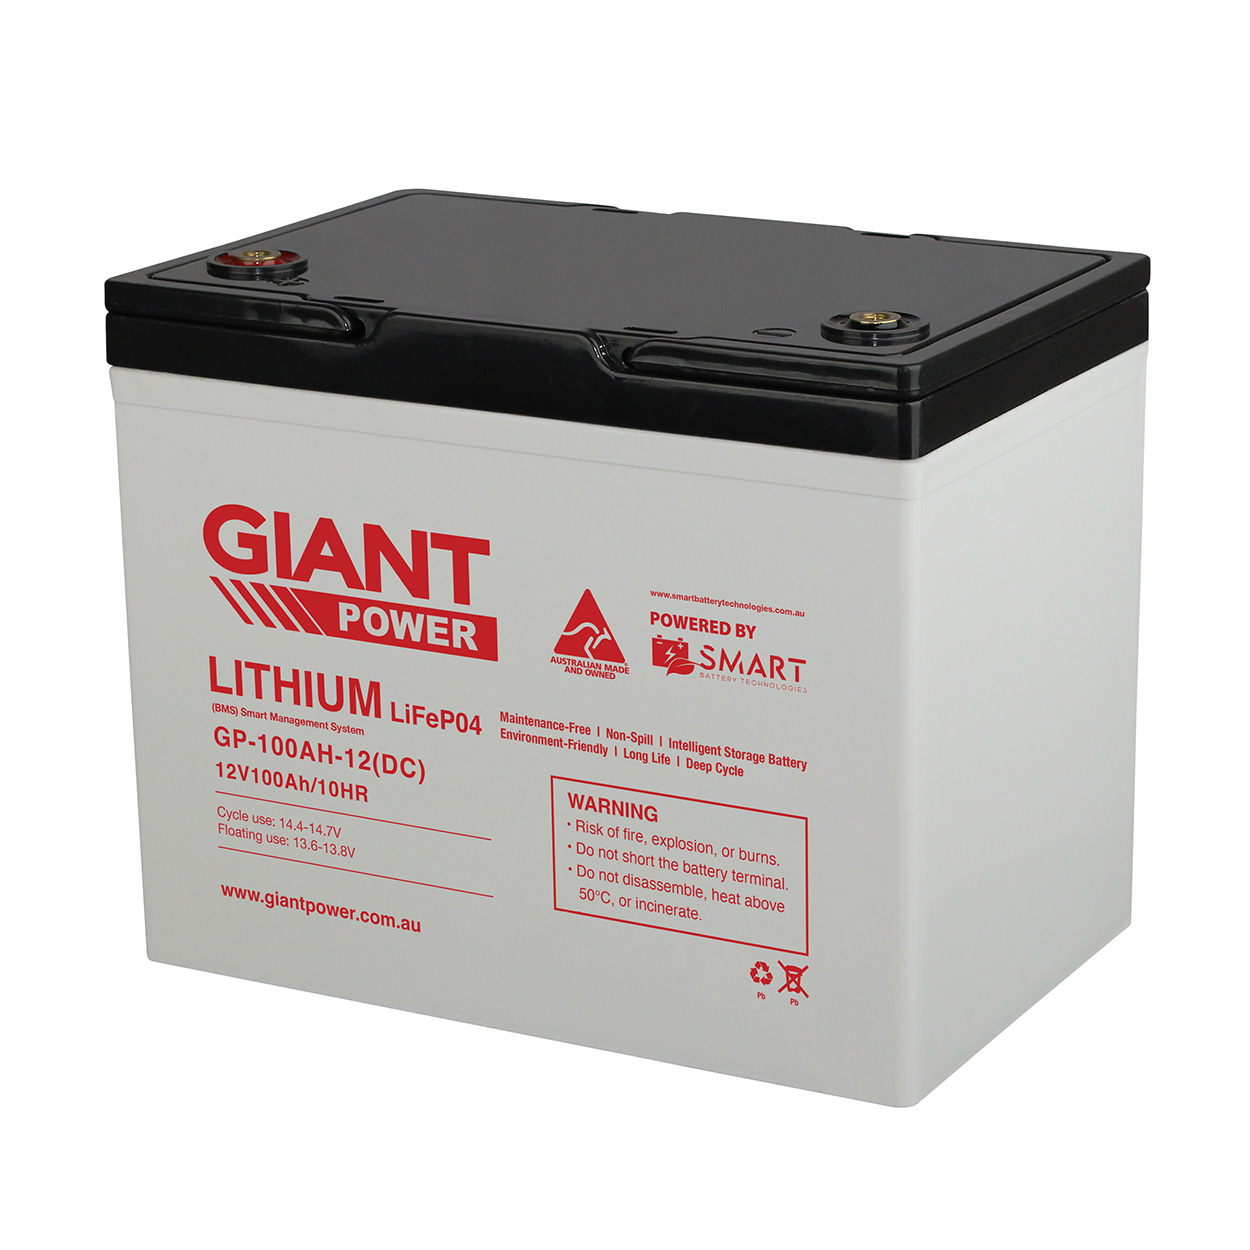 Giant Power 100Ah Lithium Batteries